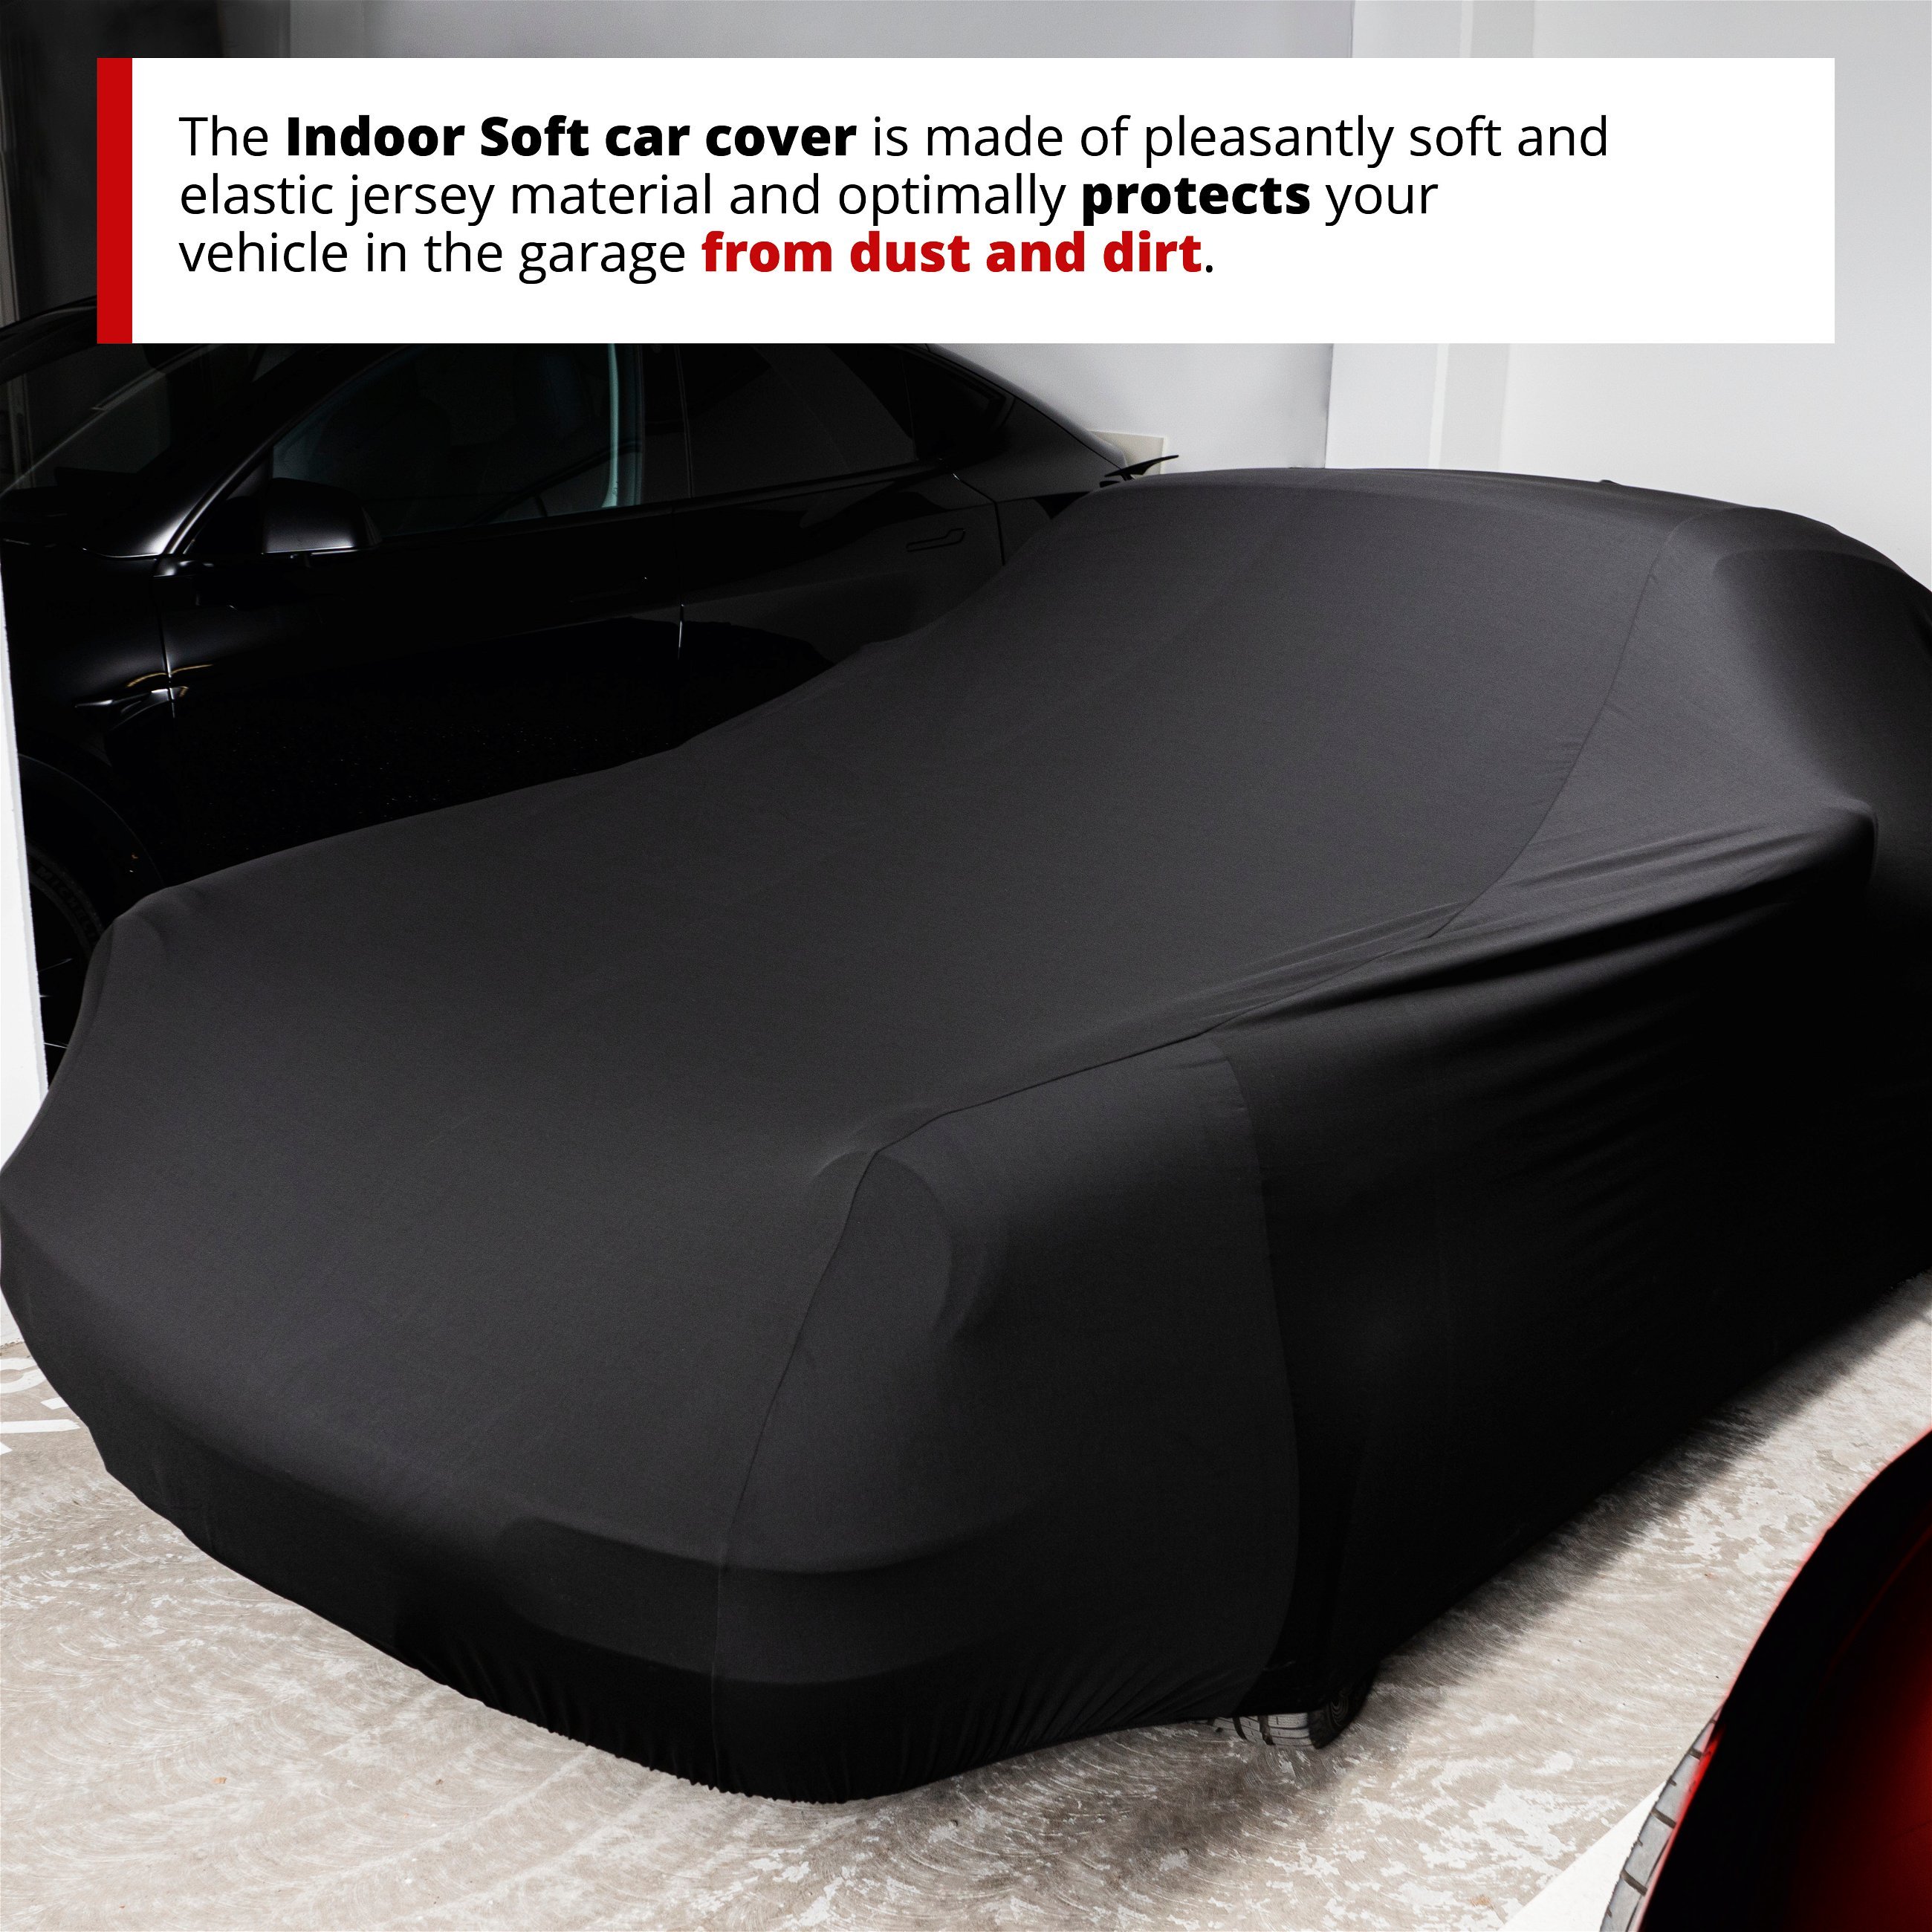 Car tarpaulin Indoor Soft size XL black